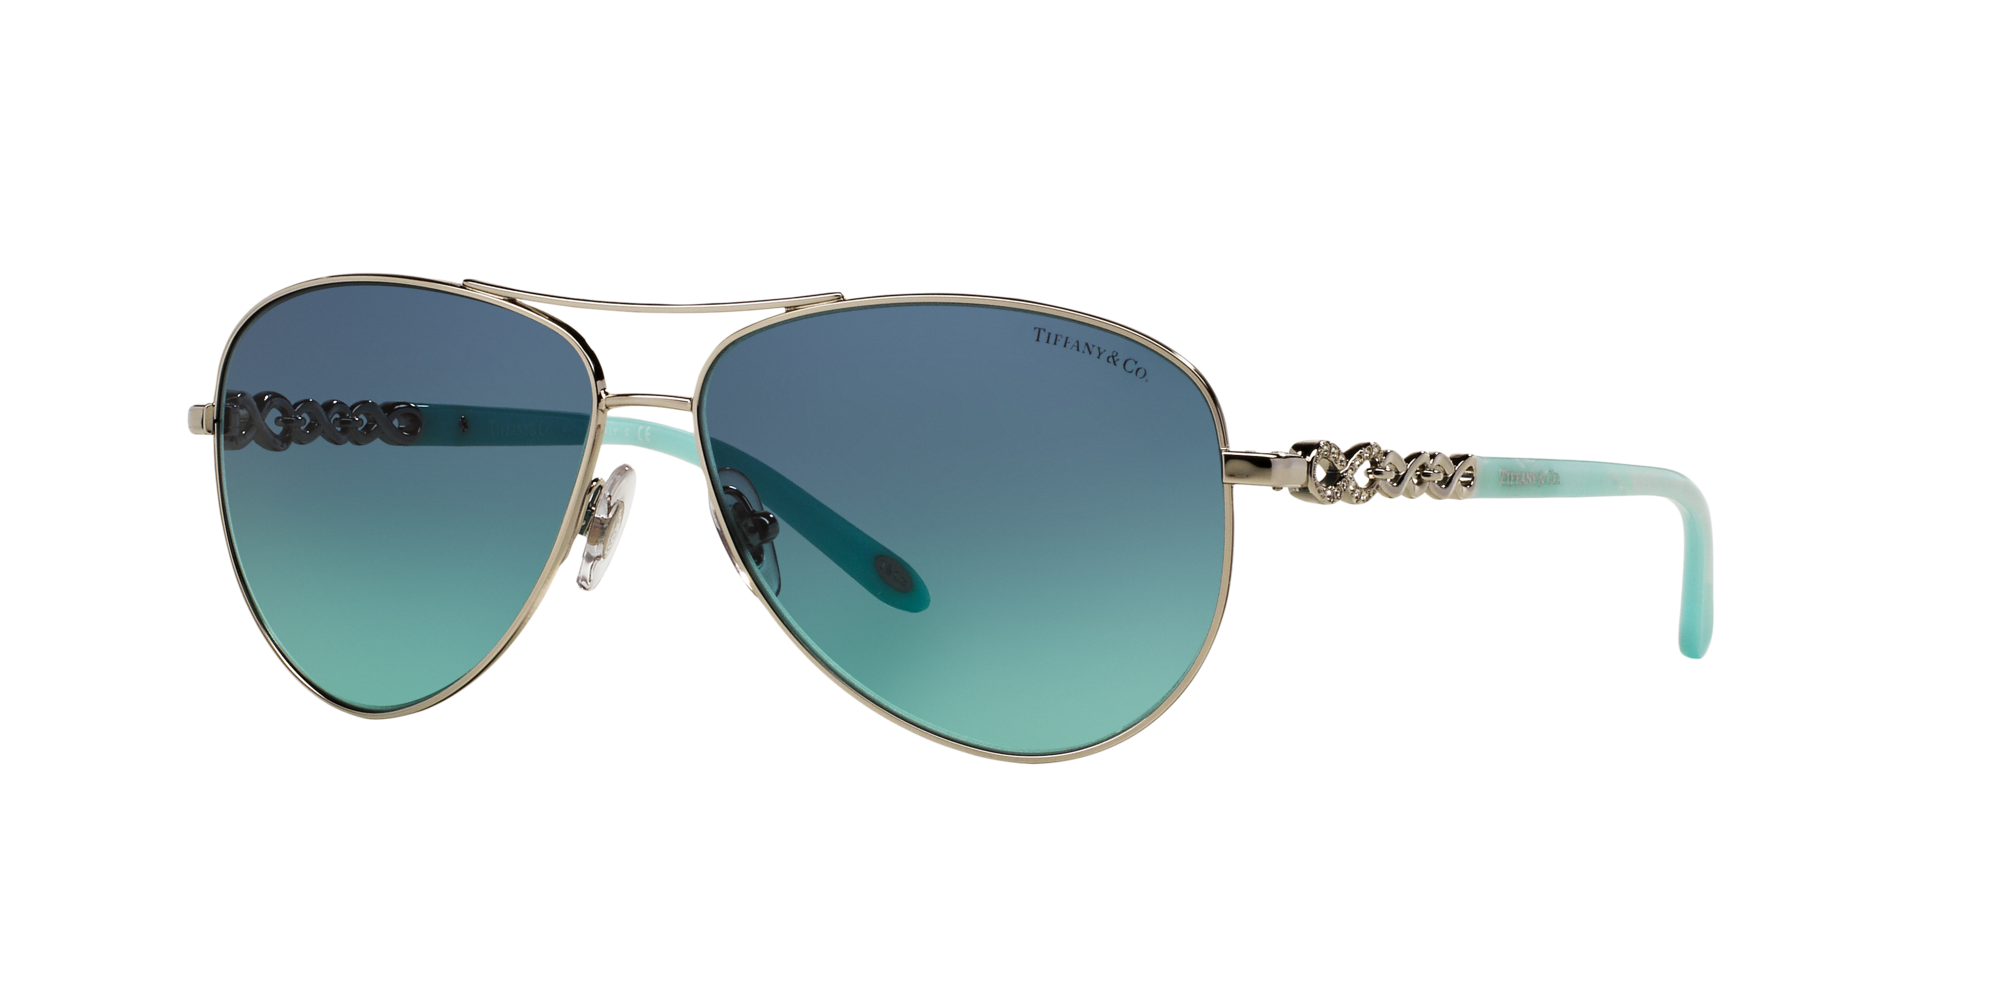 Tiffany HardWear Sunglasses in Pale Gold-colored Metal | Tiffany & Co.